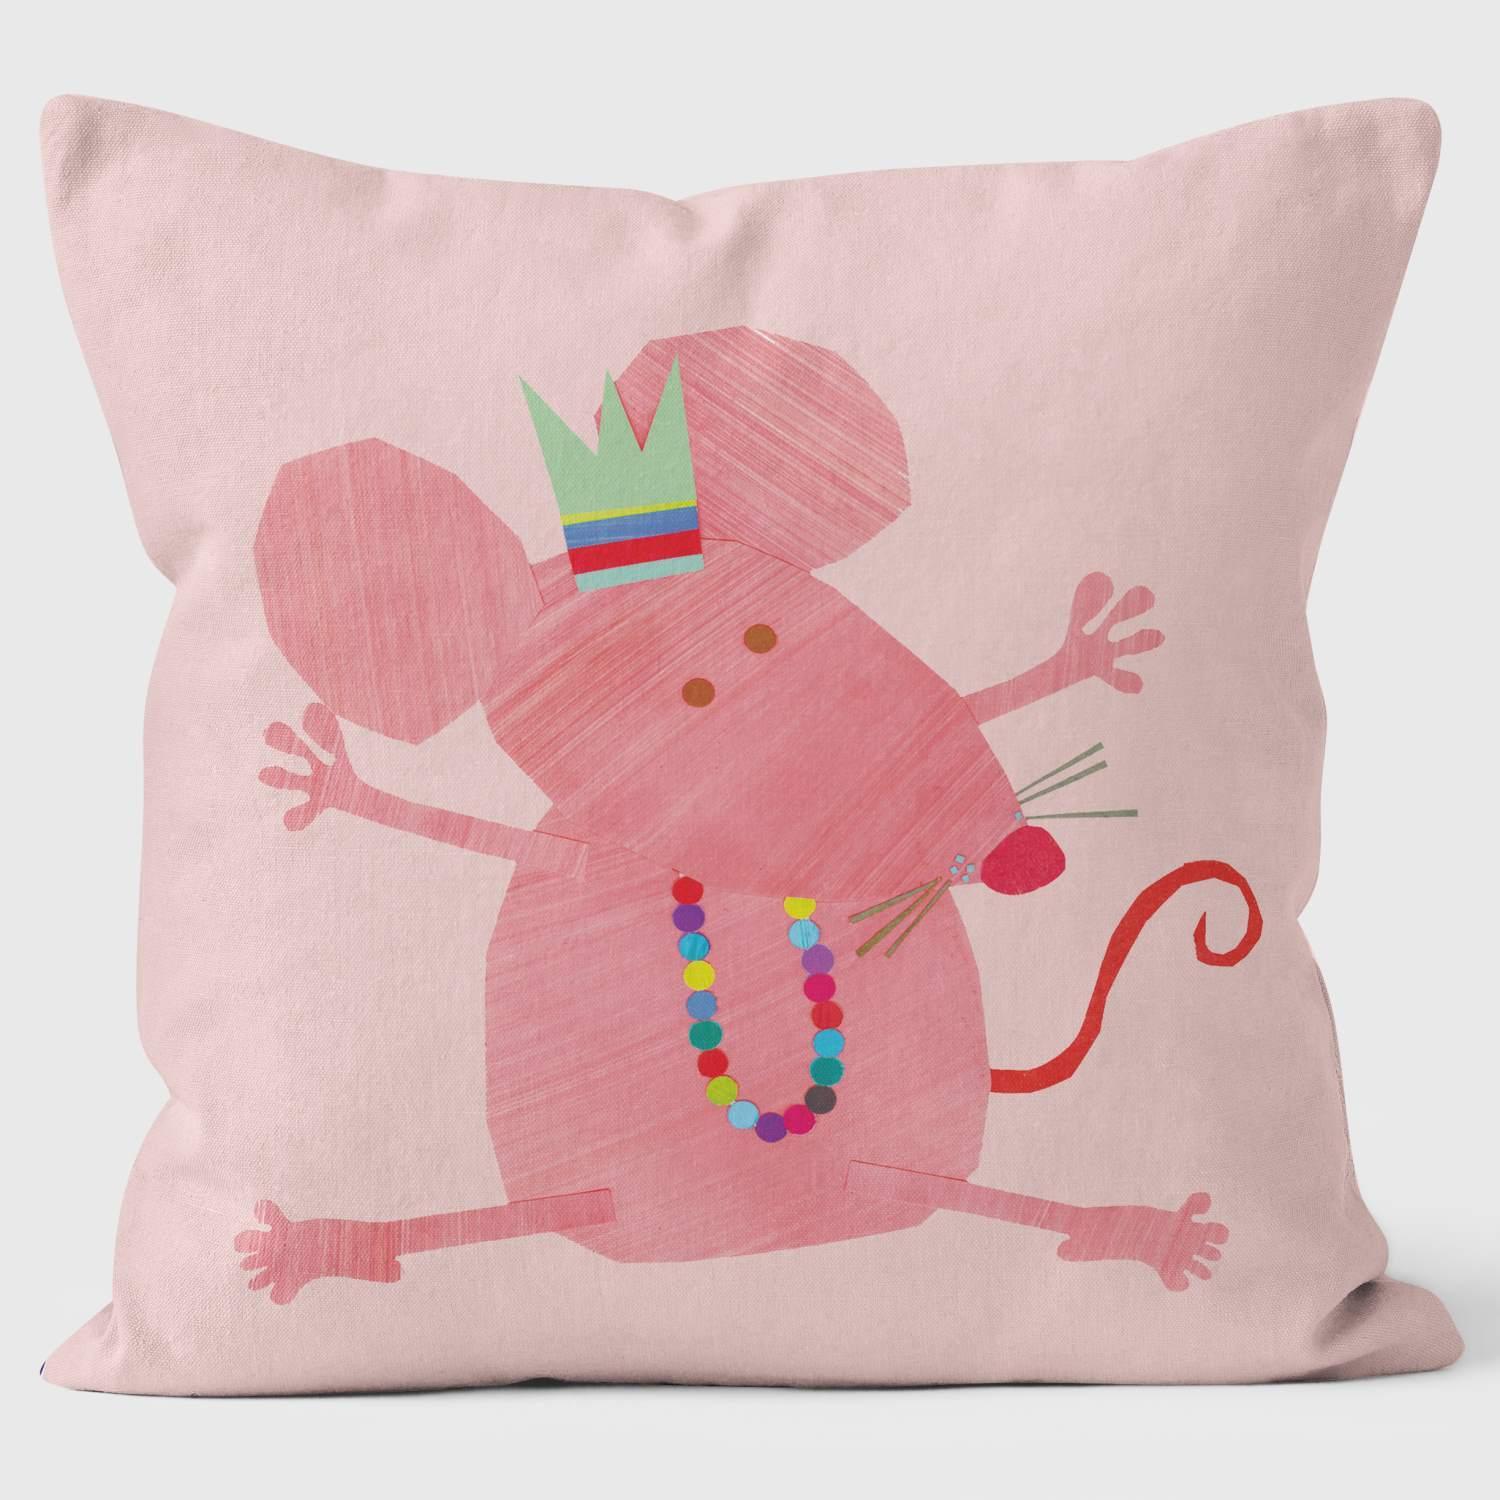 Mouse - Kali Stileman Cushion - Handmade Cushions UK - WeLoveCushions